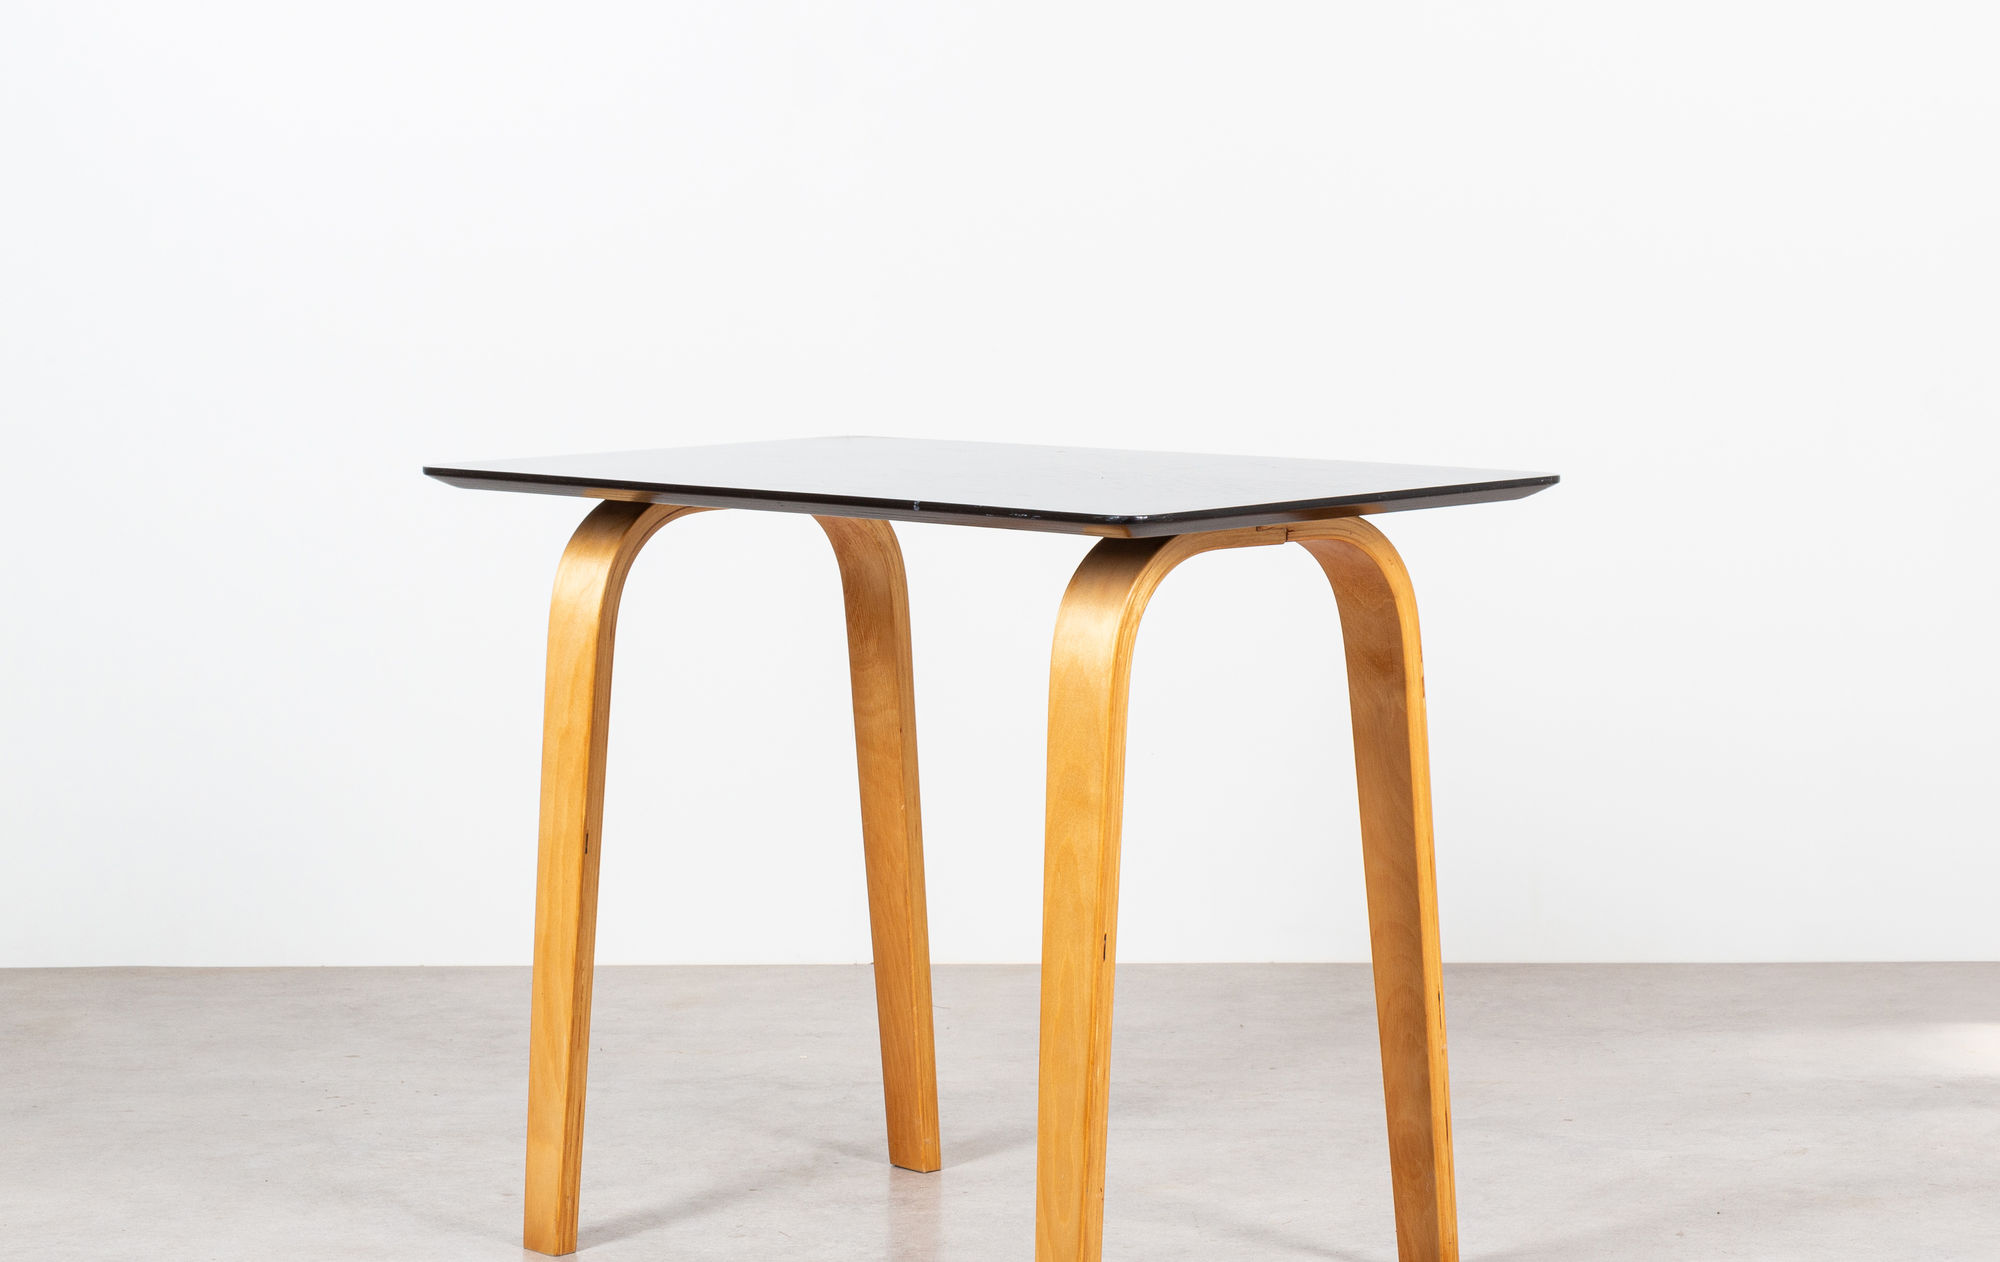 Swiss modernist table by Horgen Glarus